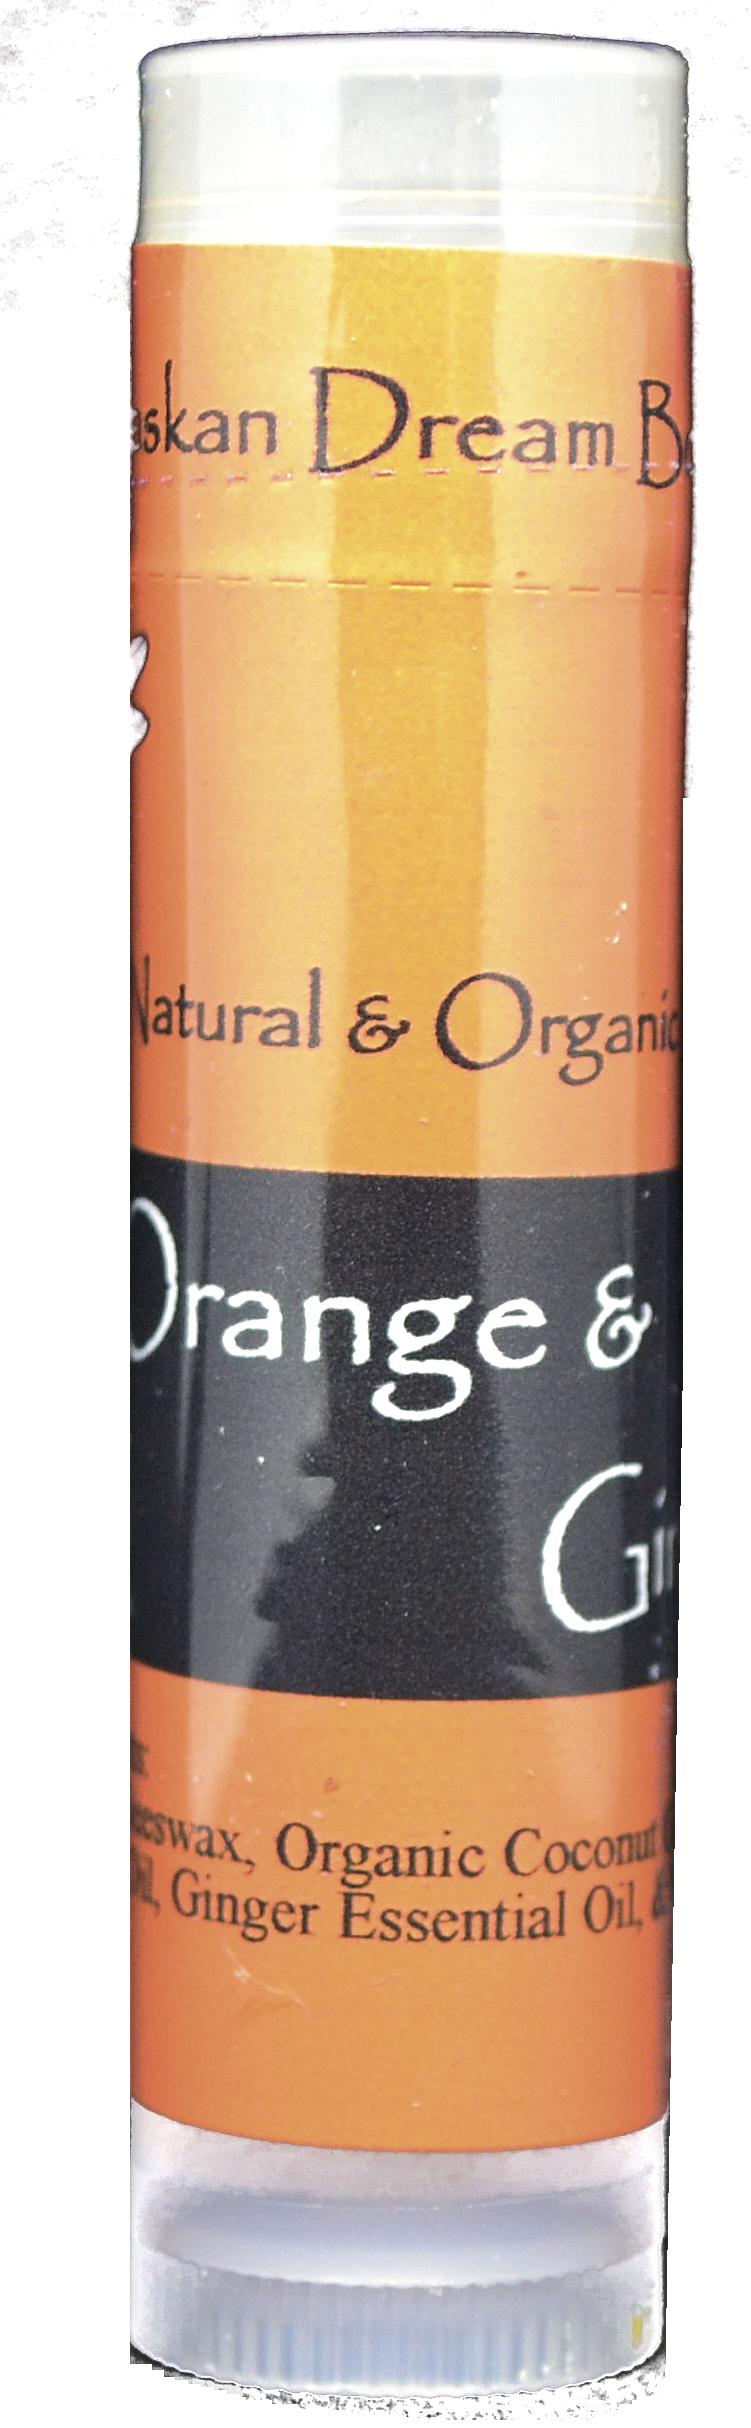 Orange & Ginger Spa Grade Lip Balm - Alaskan Dream Botanicals